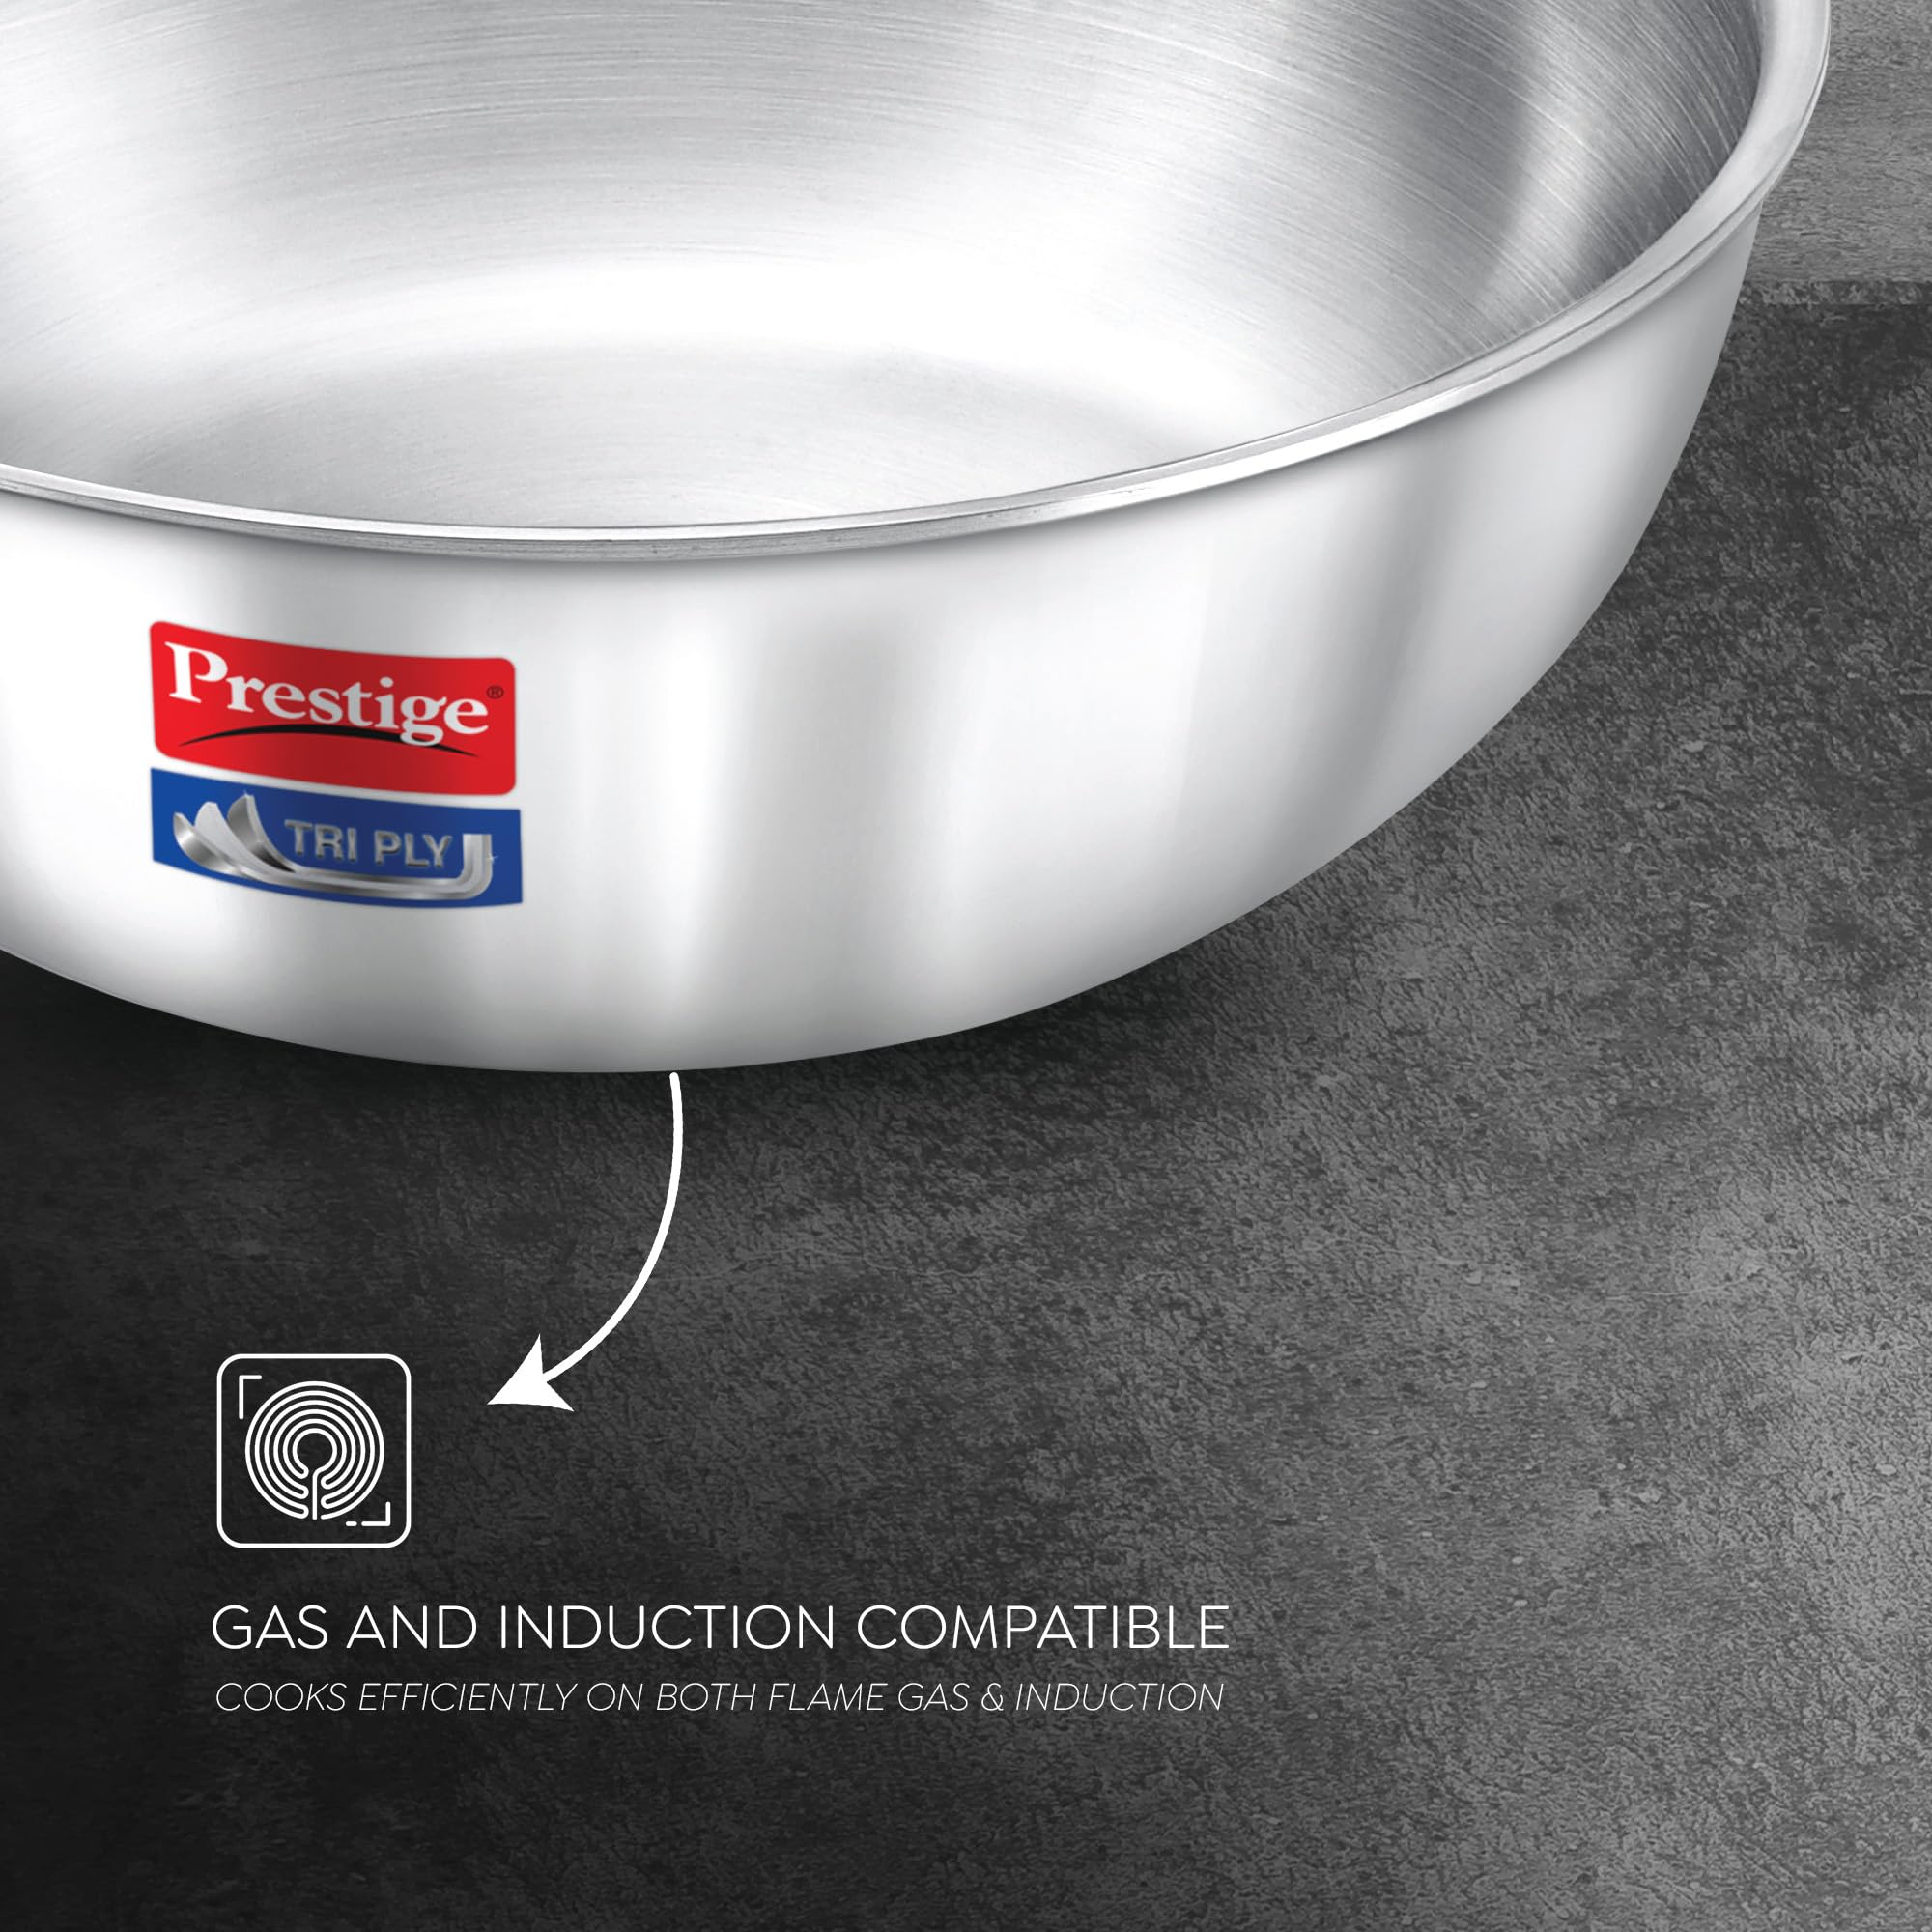 Prestige 6 PC Tri ply Tasla Kadai Set with Free Pakkad | 304 Food Grade Stainless Steel